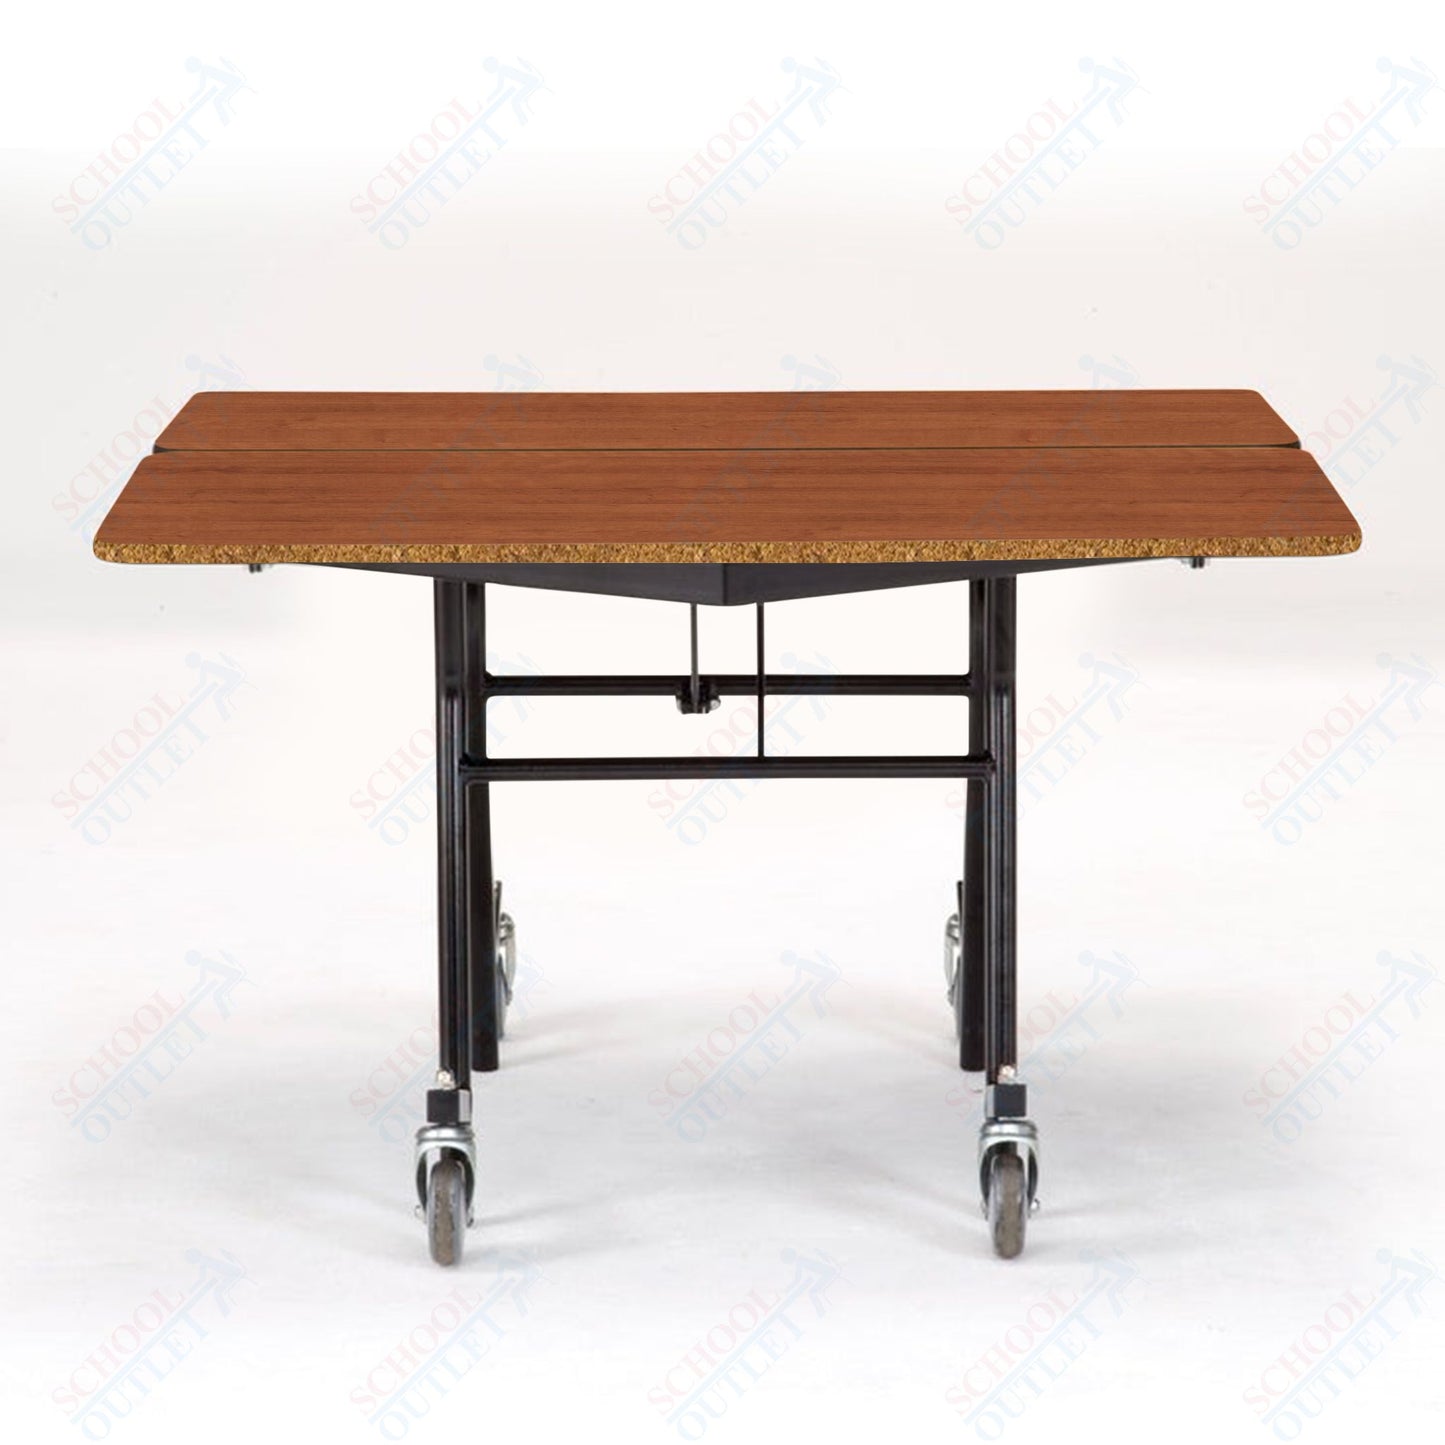 NPS Mobile Cafeteria Square Table Shape Unit - 48" W x 48" L (National Public Seating NPS-MT48Q)